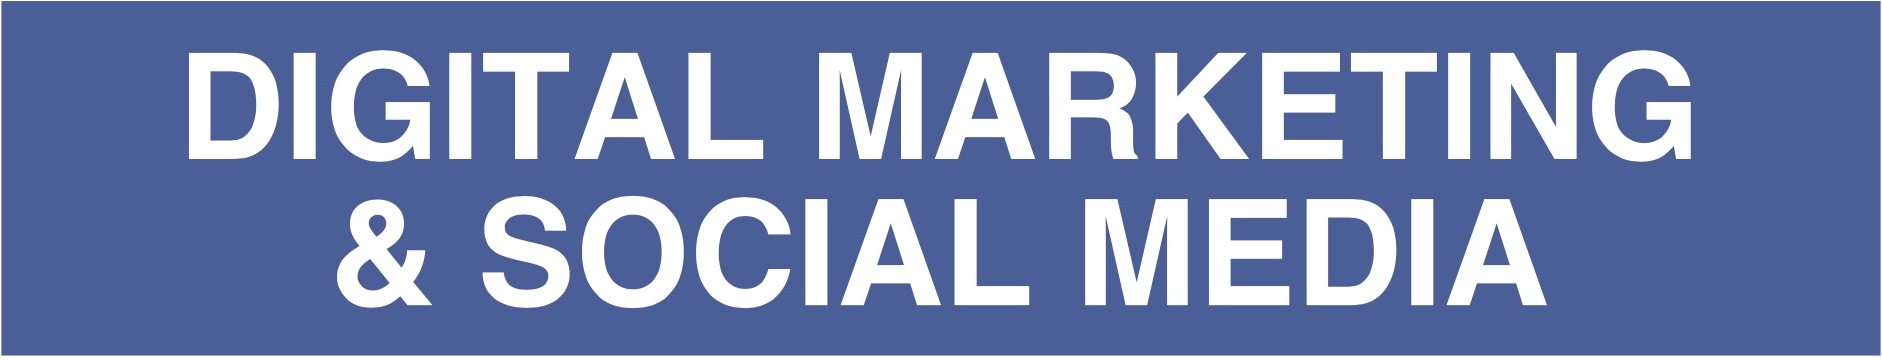 Digital Marketing and Social Media April 19